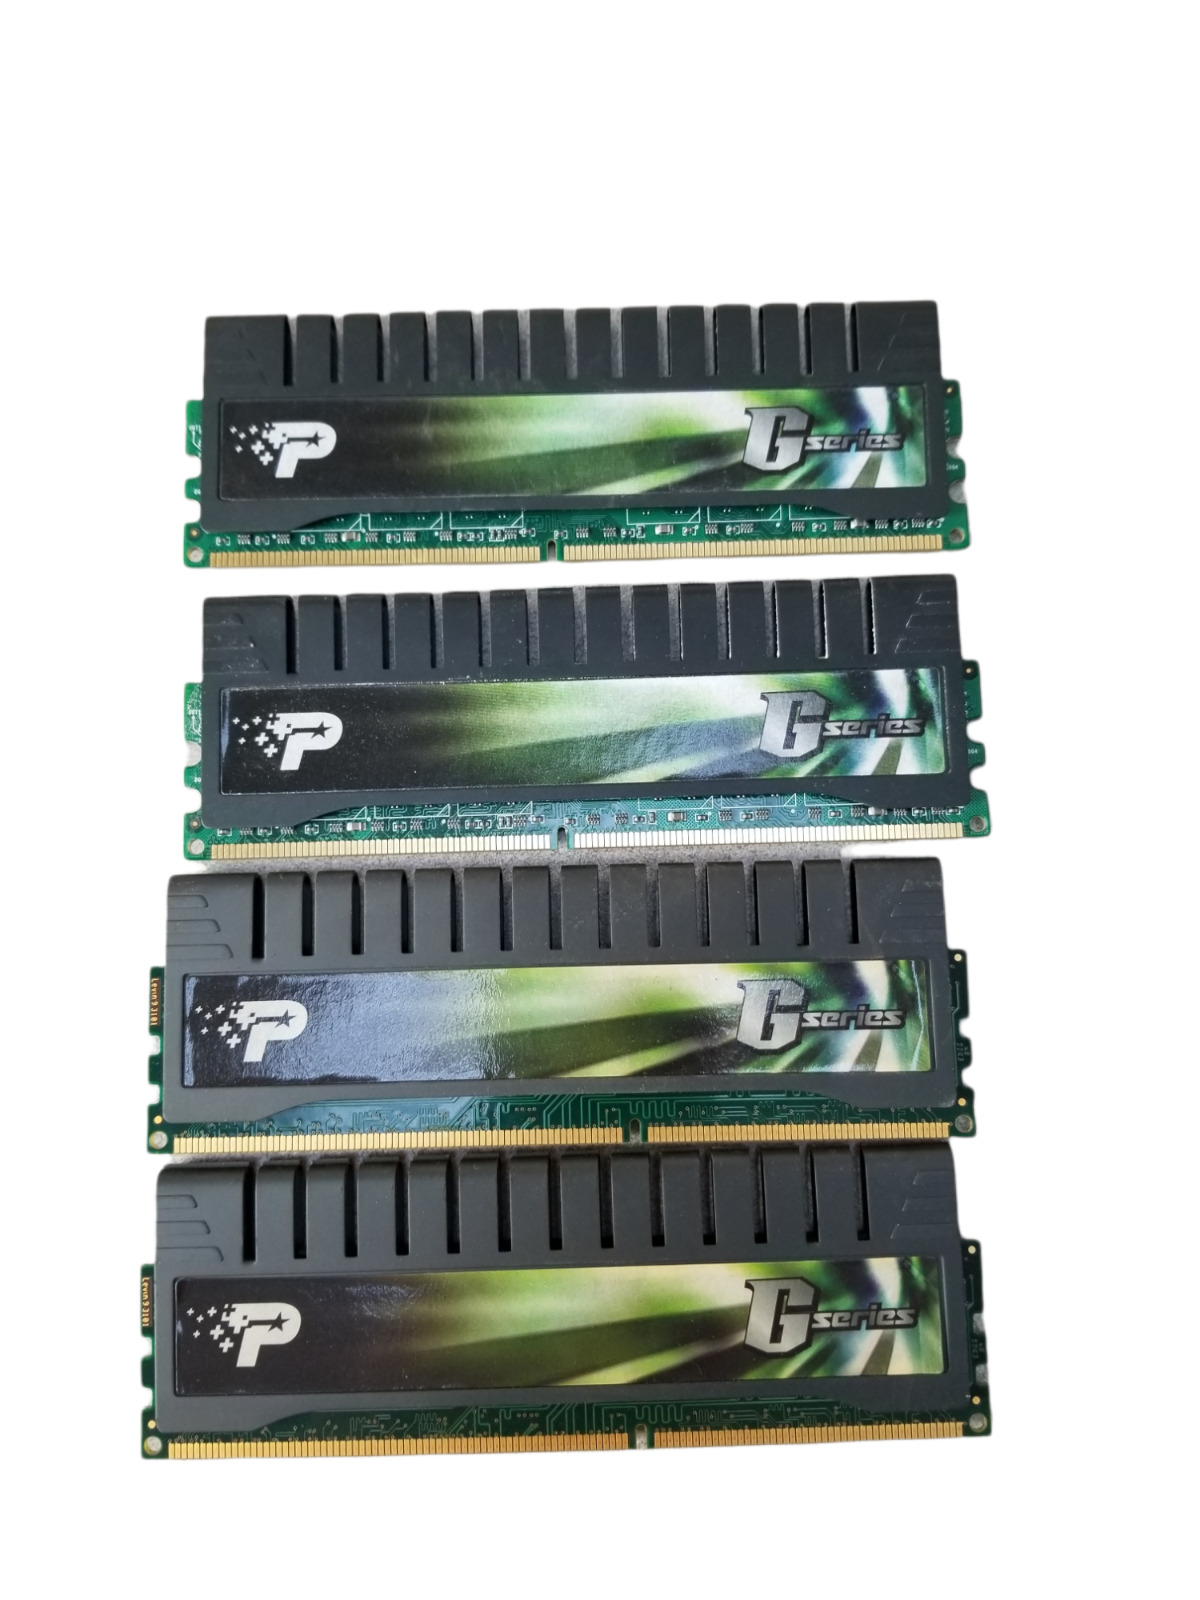 Lot of 4 Patriot G-series 8GB(4x2GB) PC3-10600 (PGS34G1333ELK) RAM Memory